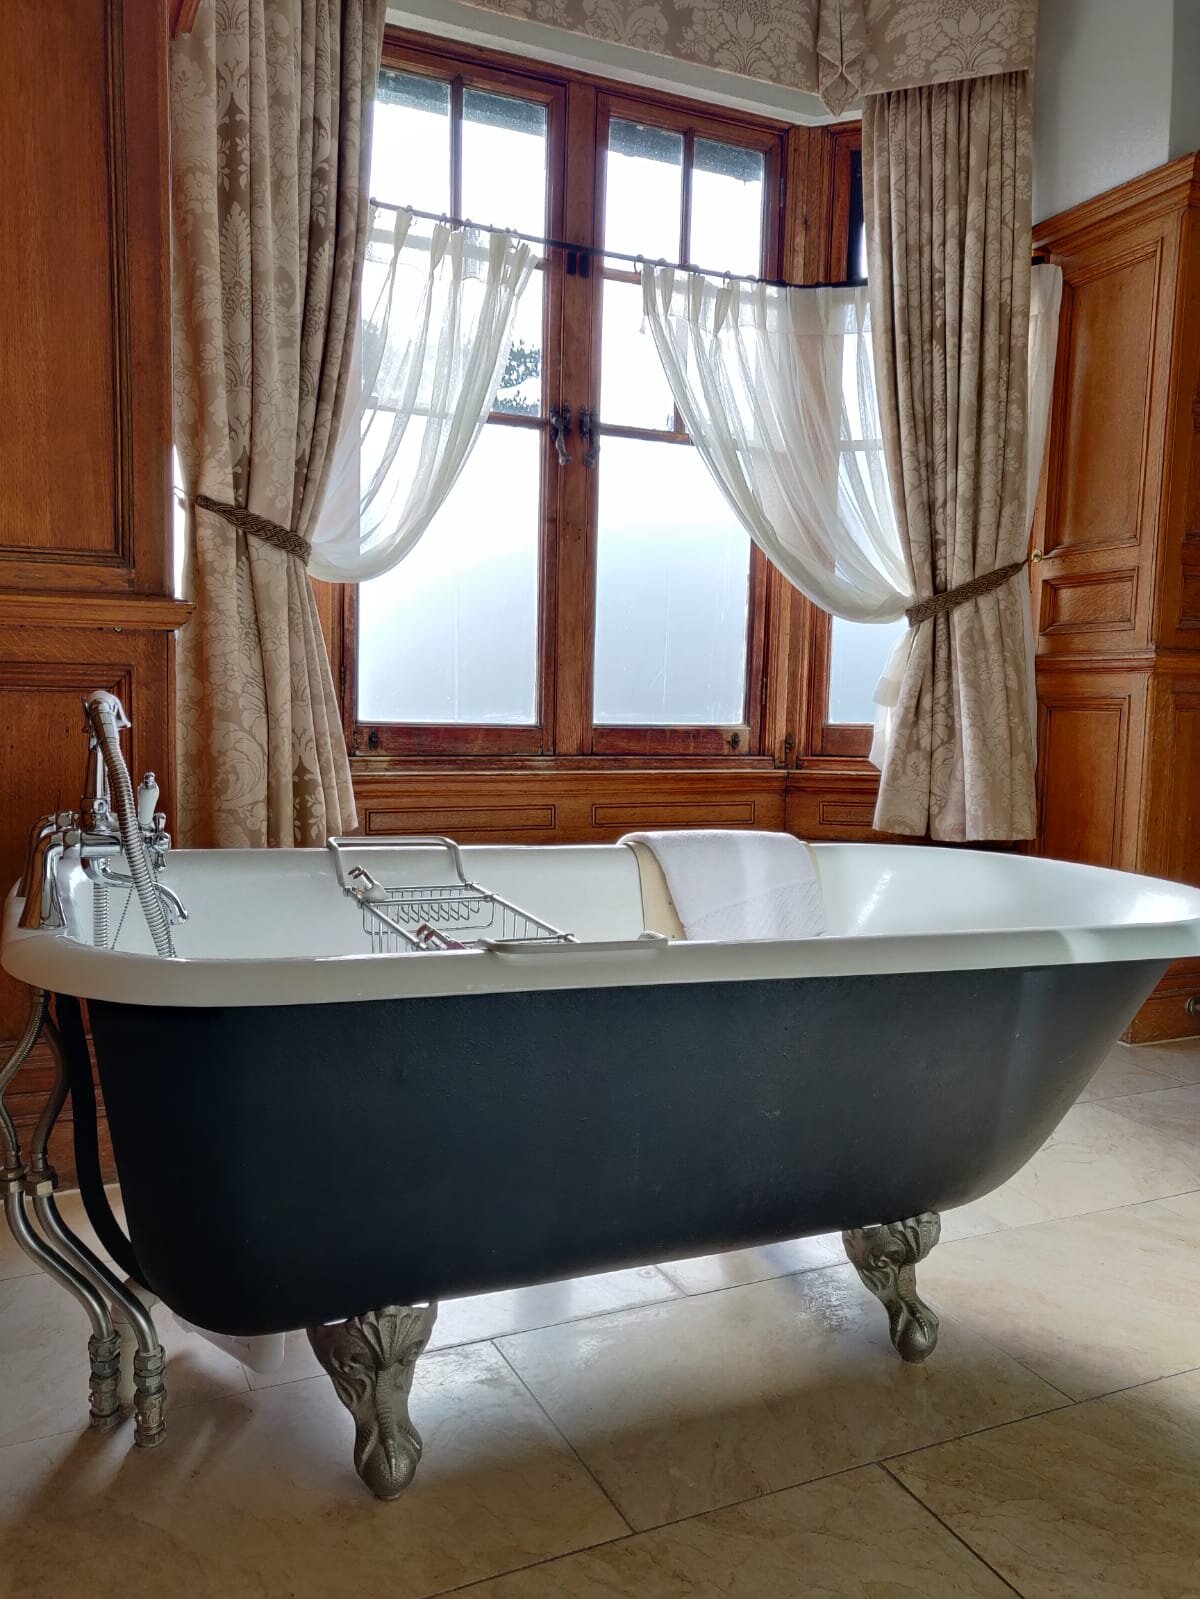 Wood Norton Hotel Review bathtub